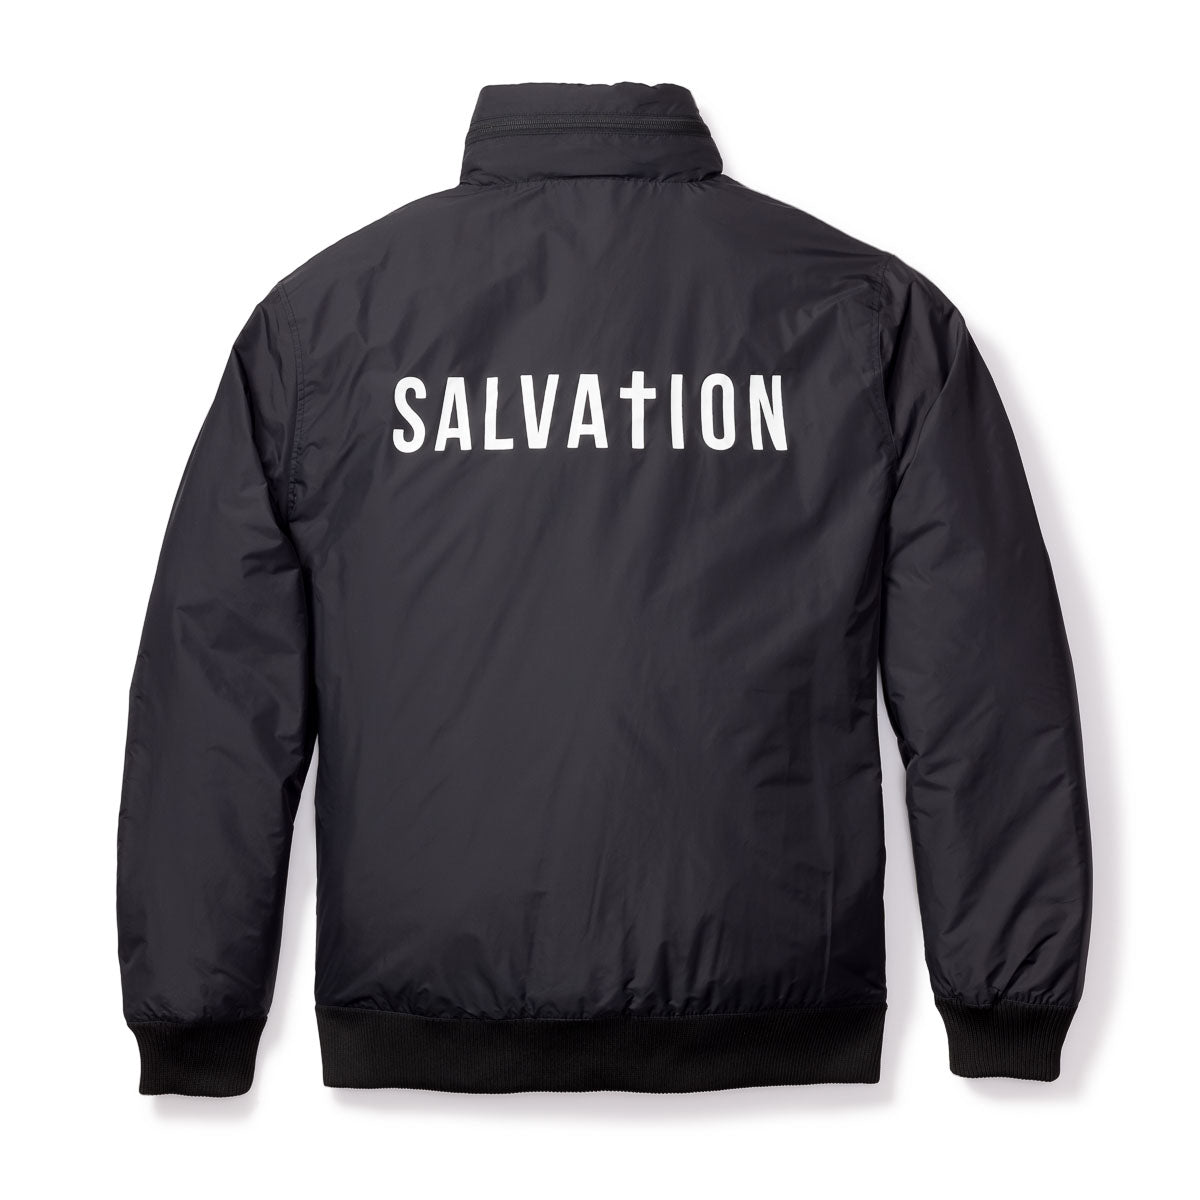 Salvation Bomber Jacket with Concealed Hood - Black